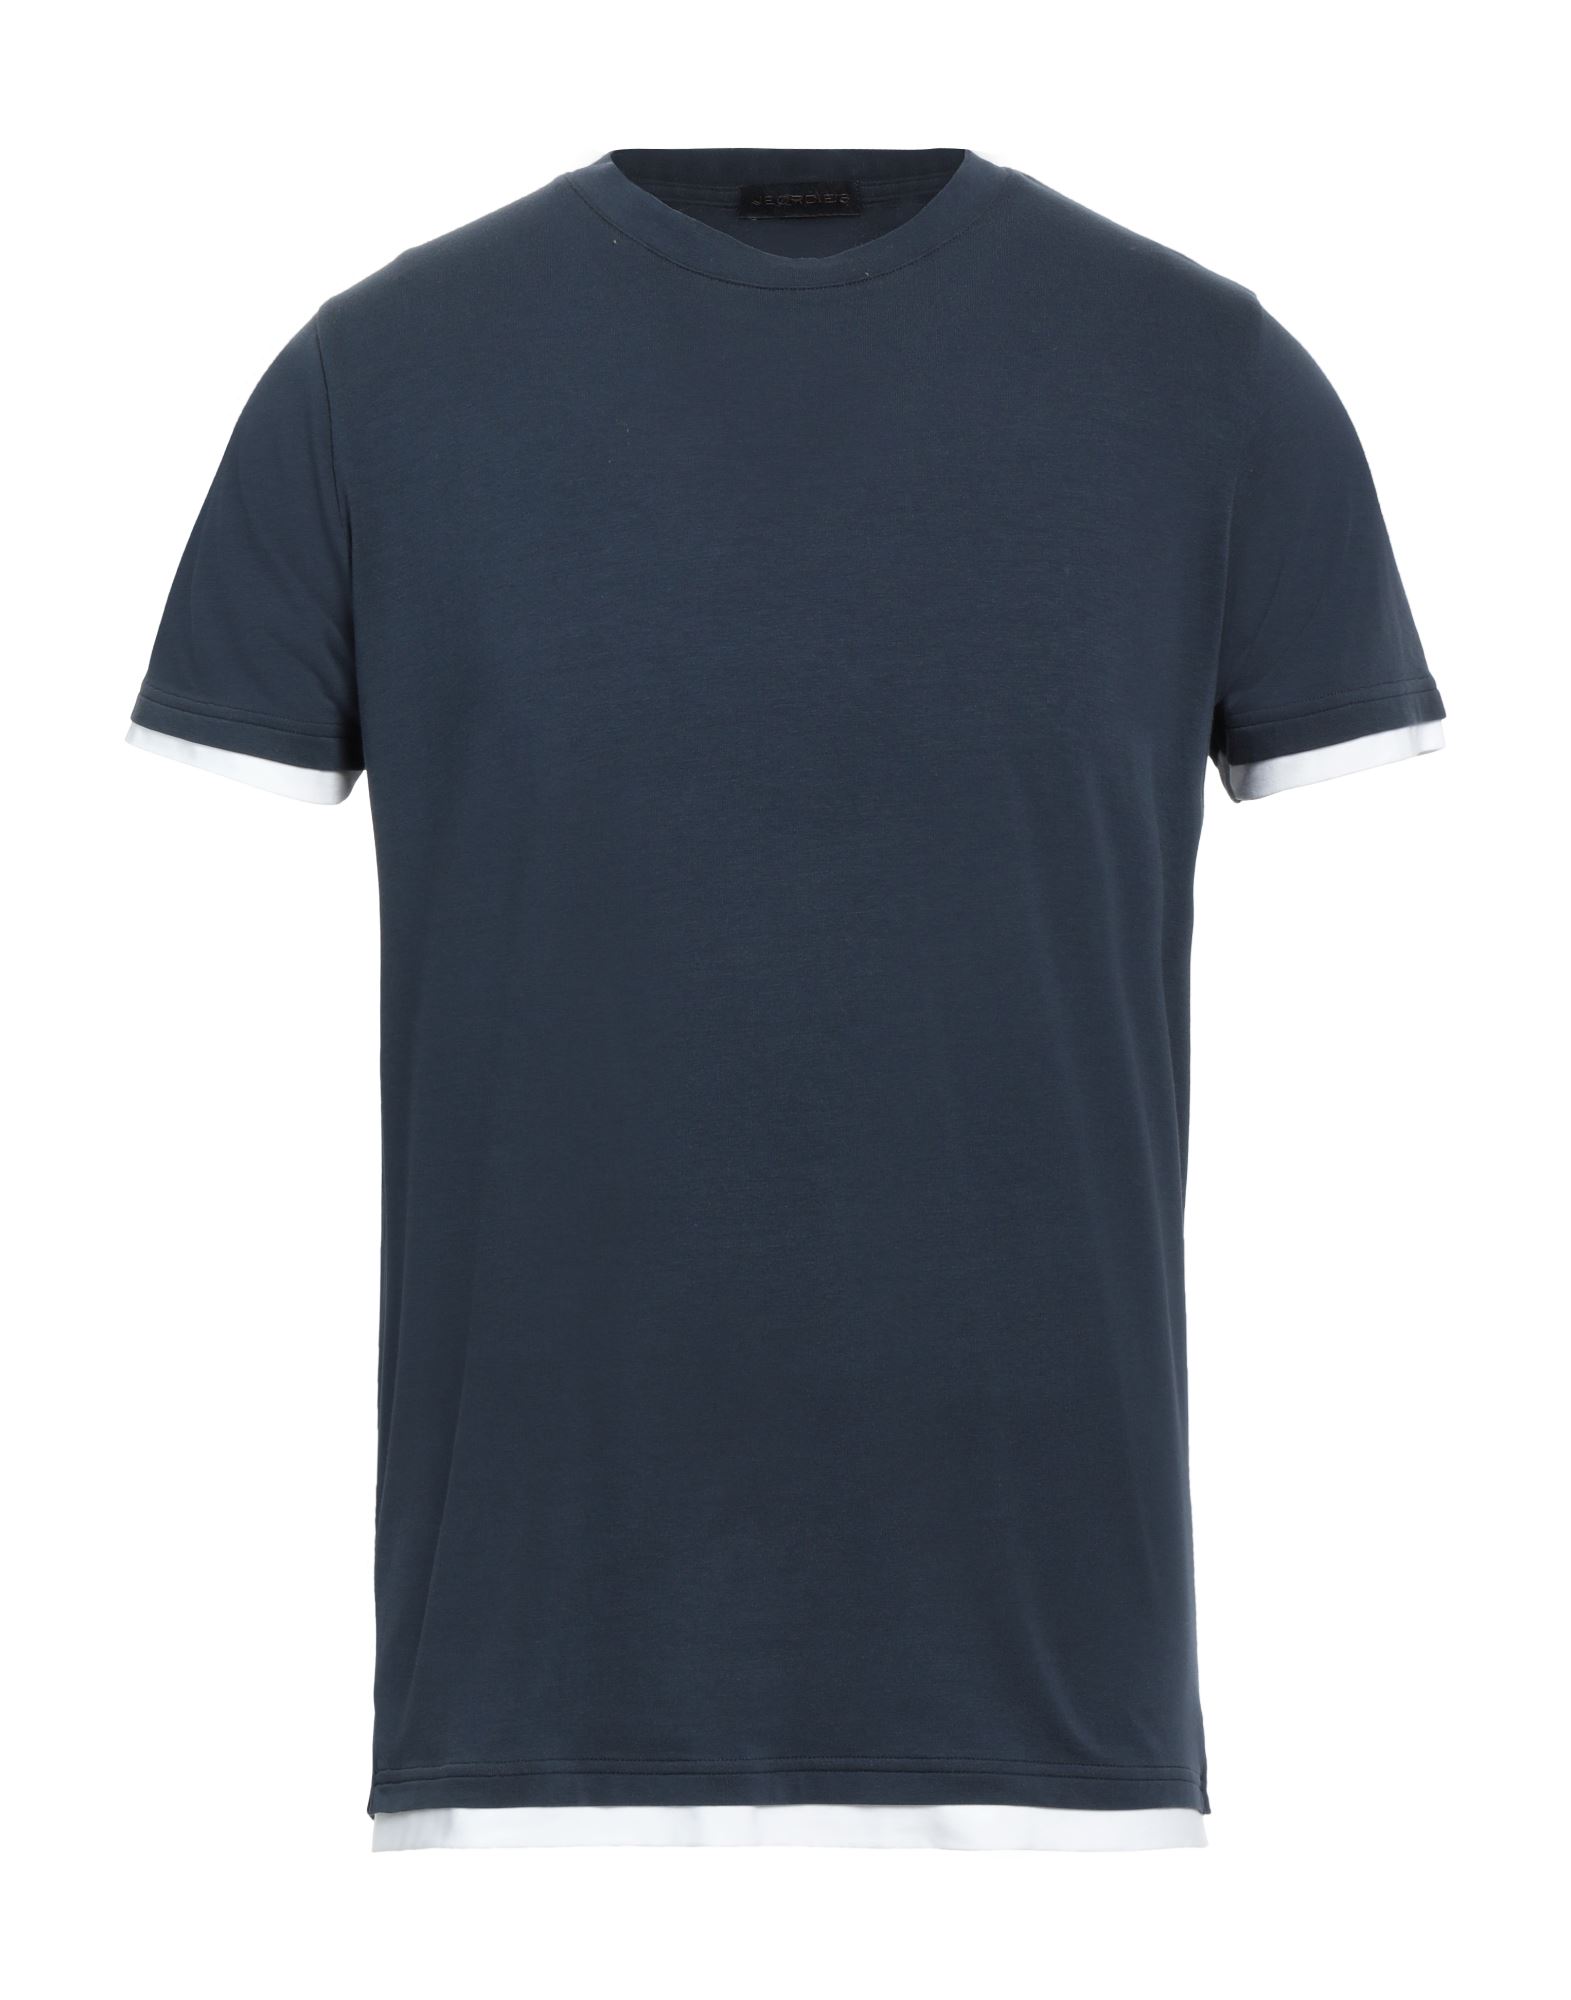 Jeordie's Man T-shirt Navy Blue Size Xl Cotton, Elastane